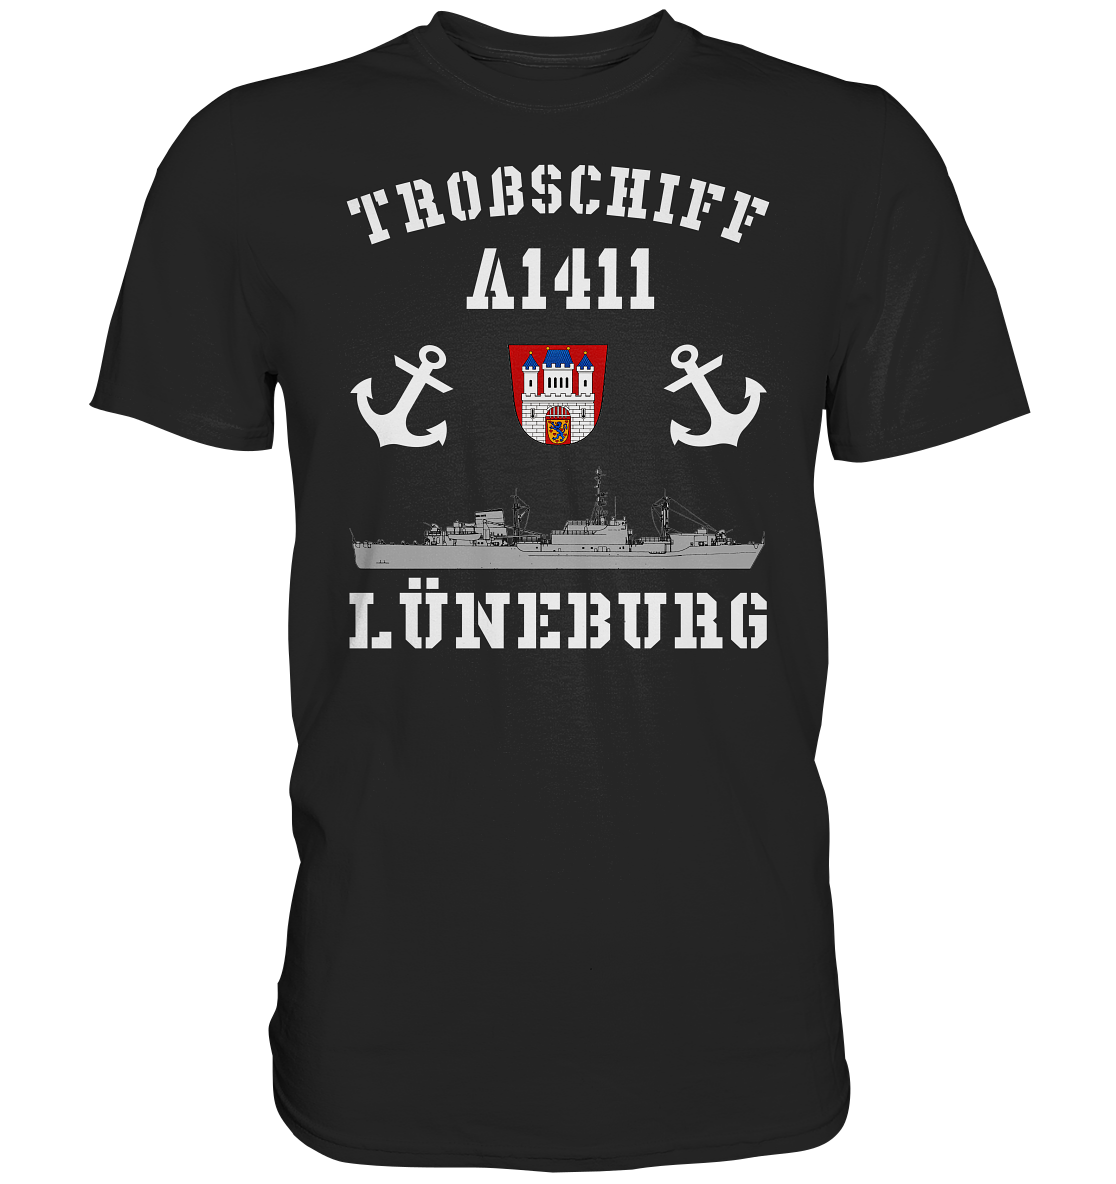 Troßschiff A1411 LÜNEBURG - Premium Shirt